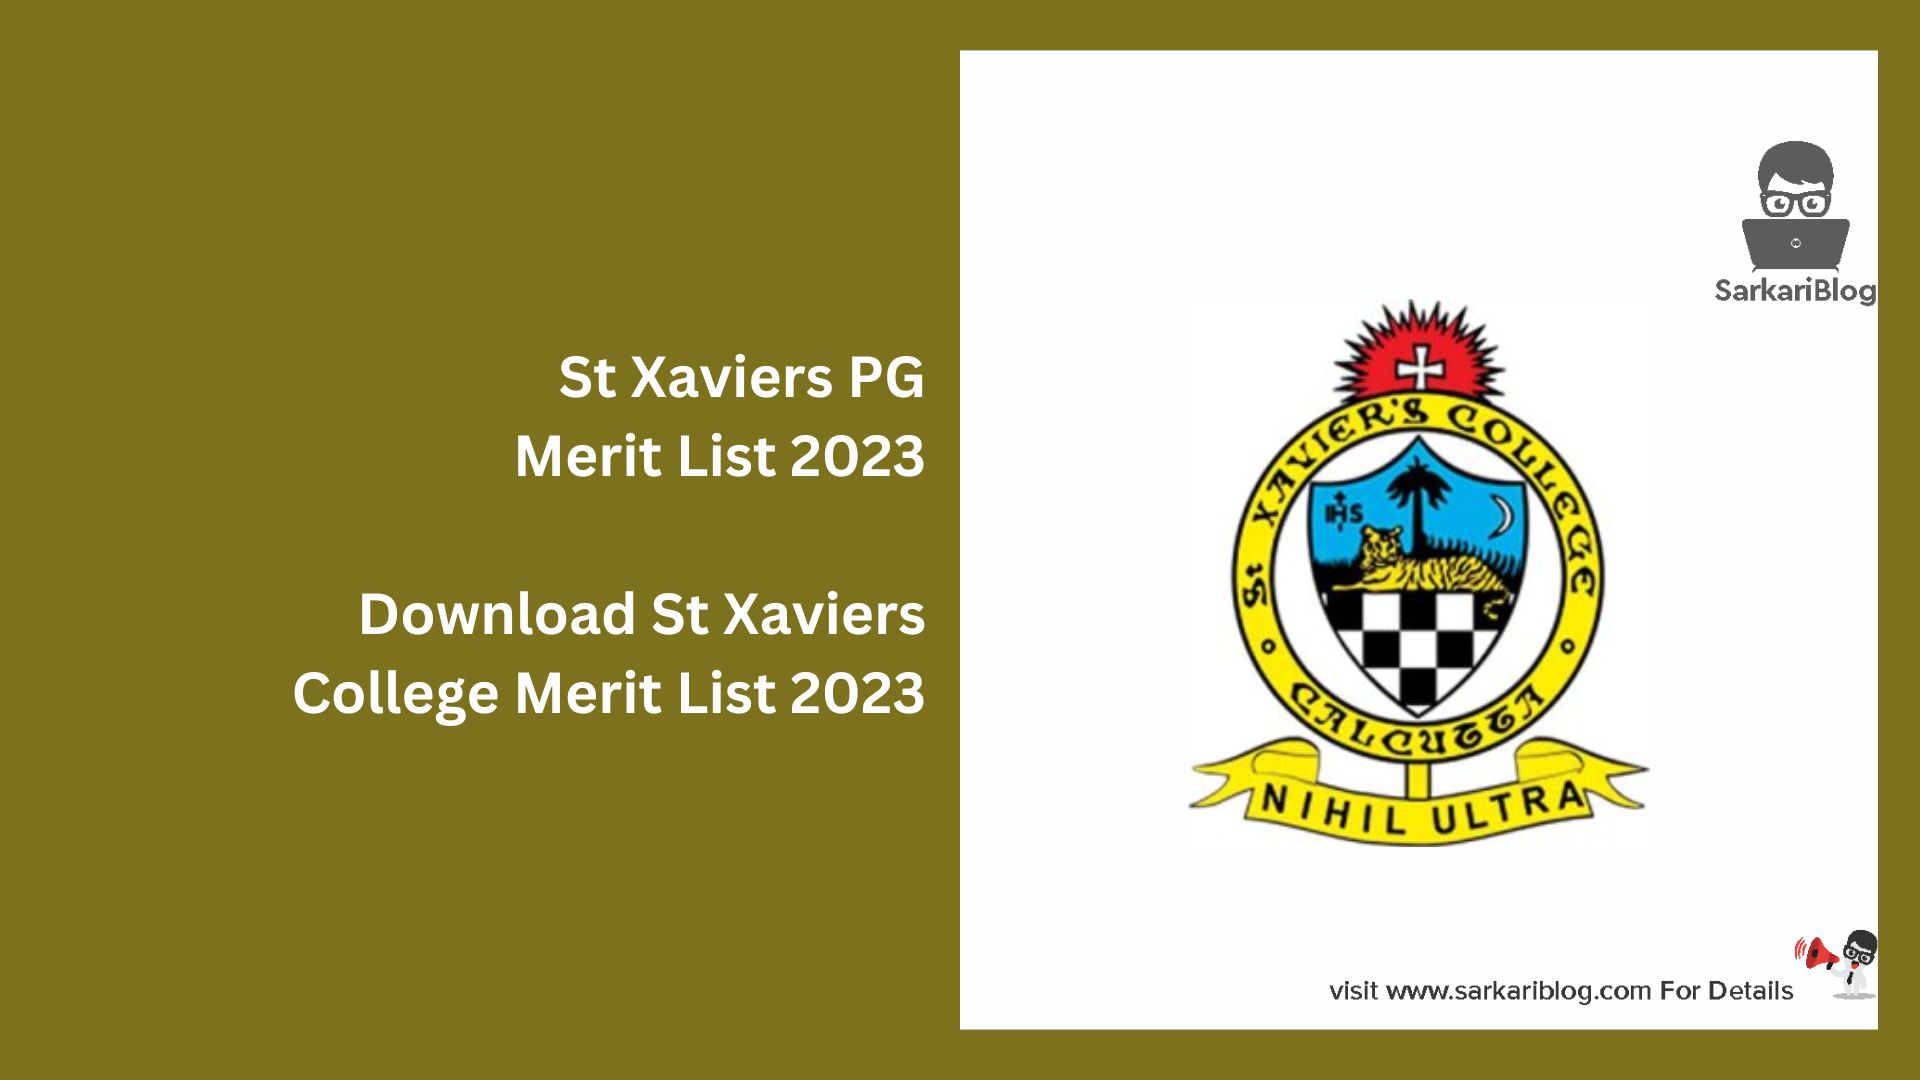 St Xaviers PG Merit List 2023